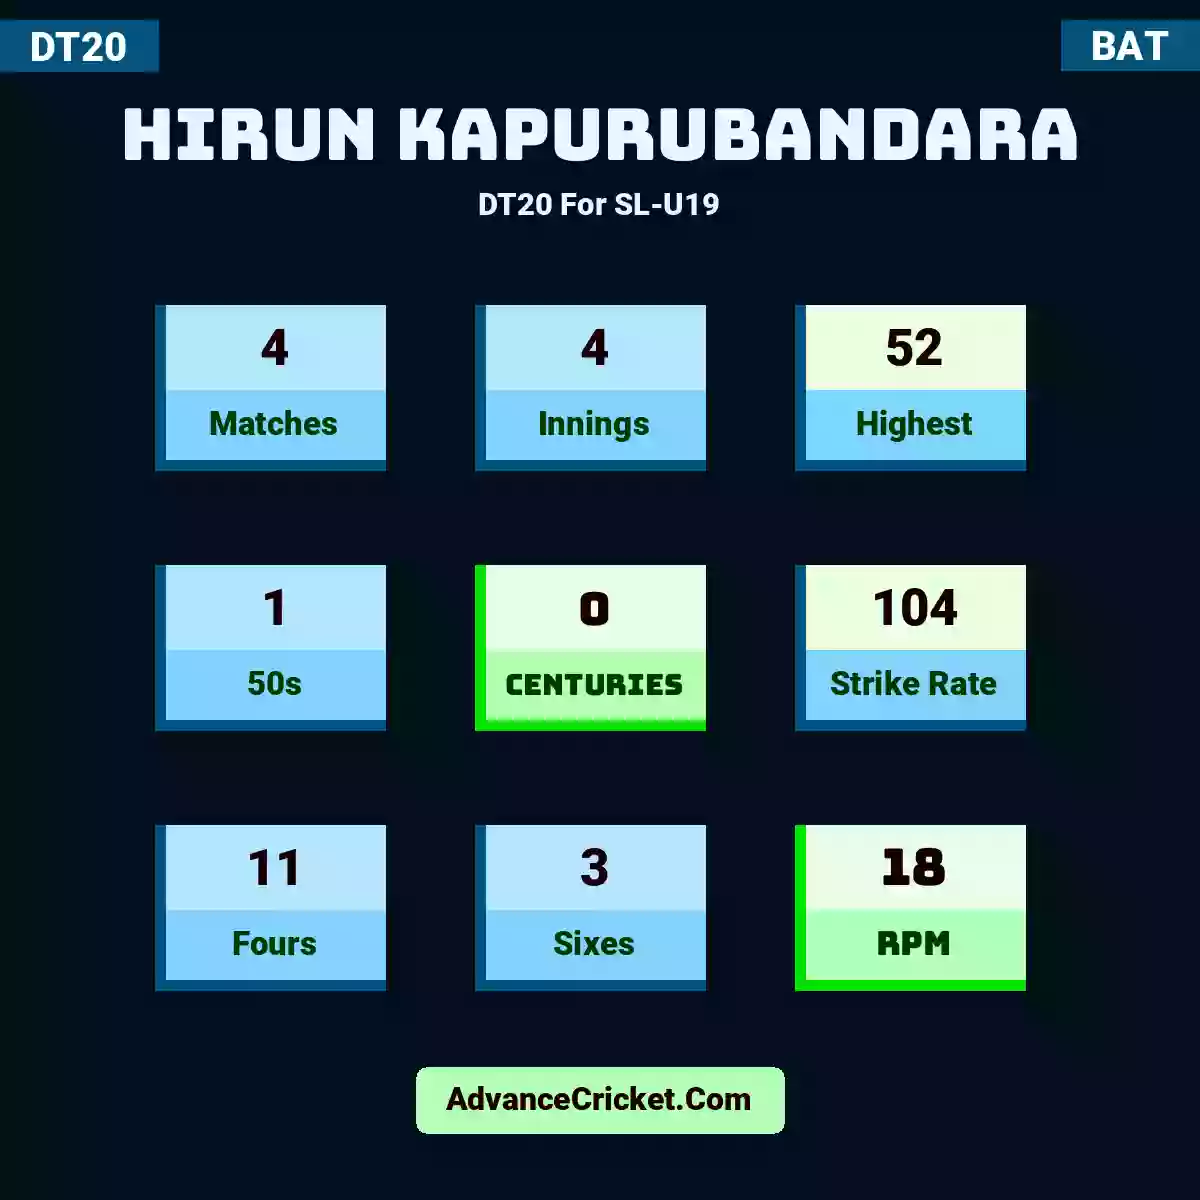 Hirun Kapurubandara DT20  For SL-U19, Hirun Kapurubandara played 4 matches, scored 52 runs as highest, 1 half-centuries, and 0 centuries, with a strike rate of 104. H.Kapurubandara hit 11 fours and 3 sixes, with an RPM of 18.